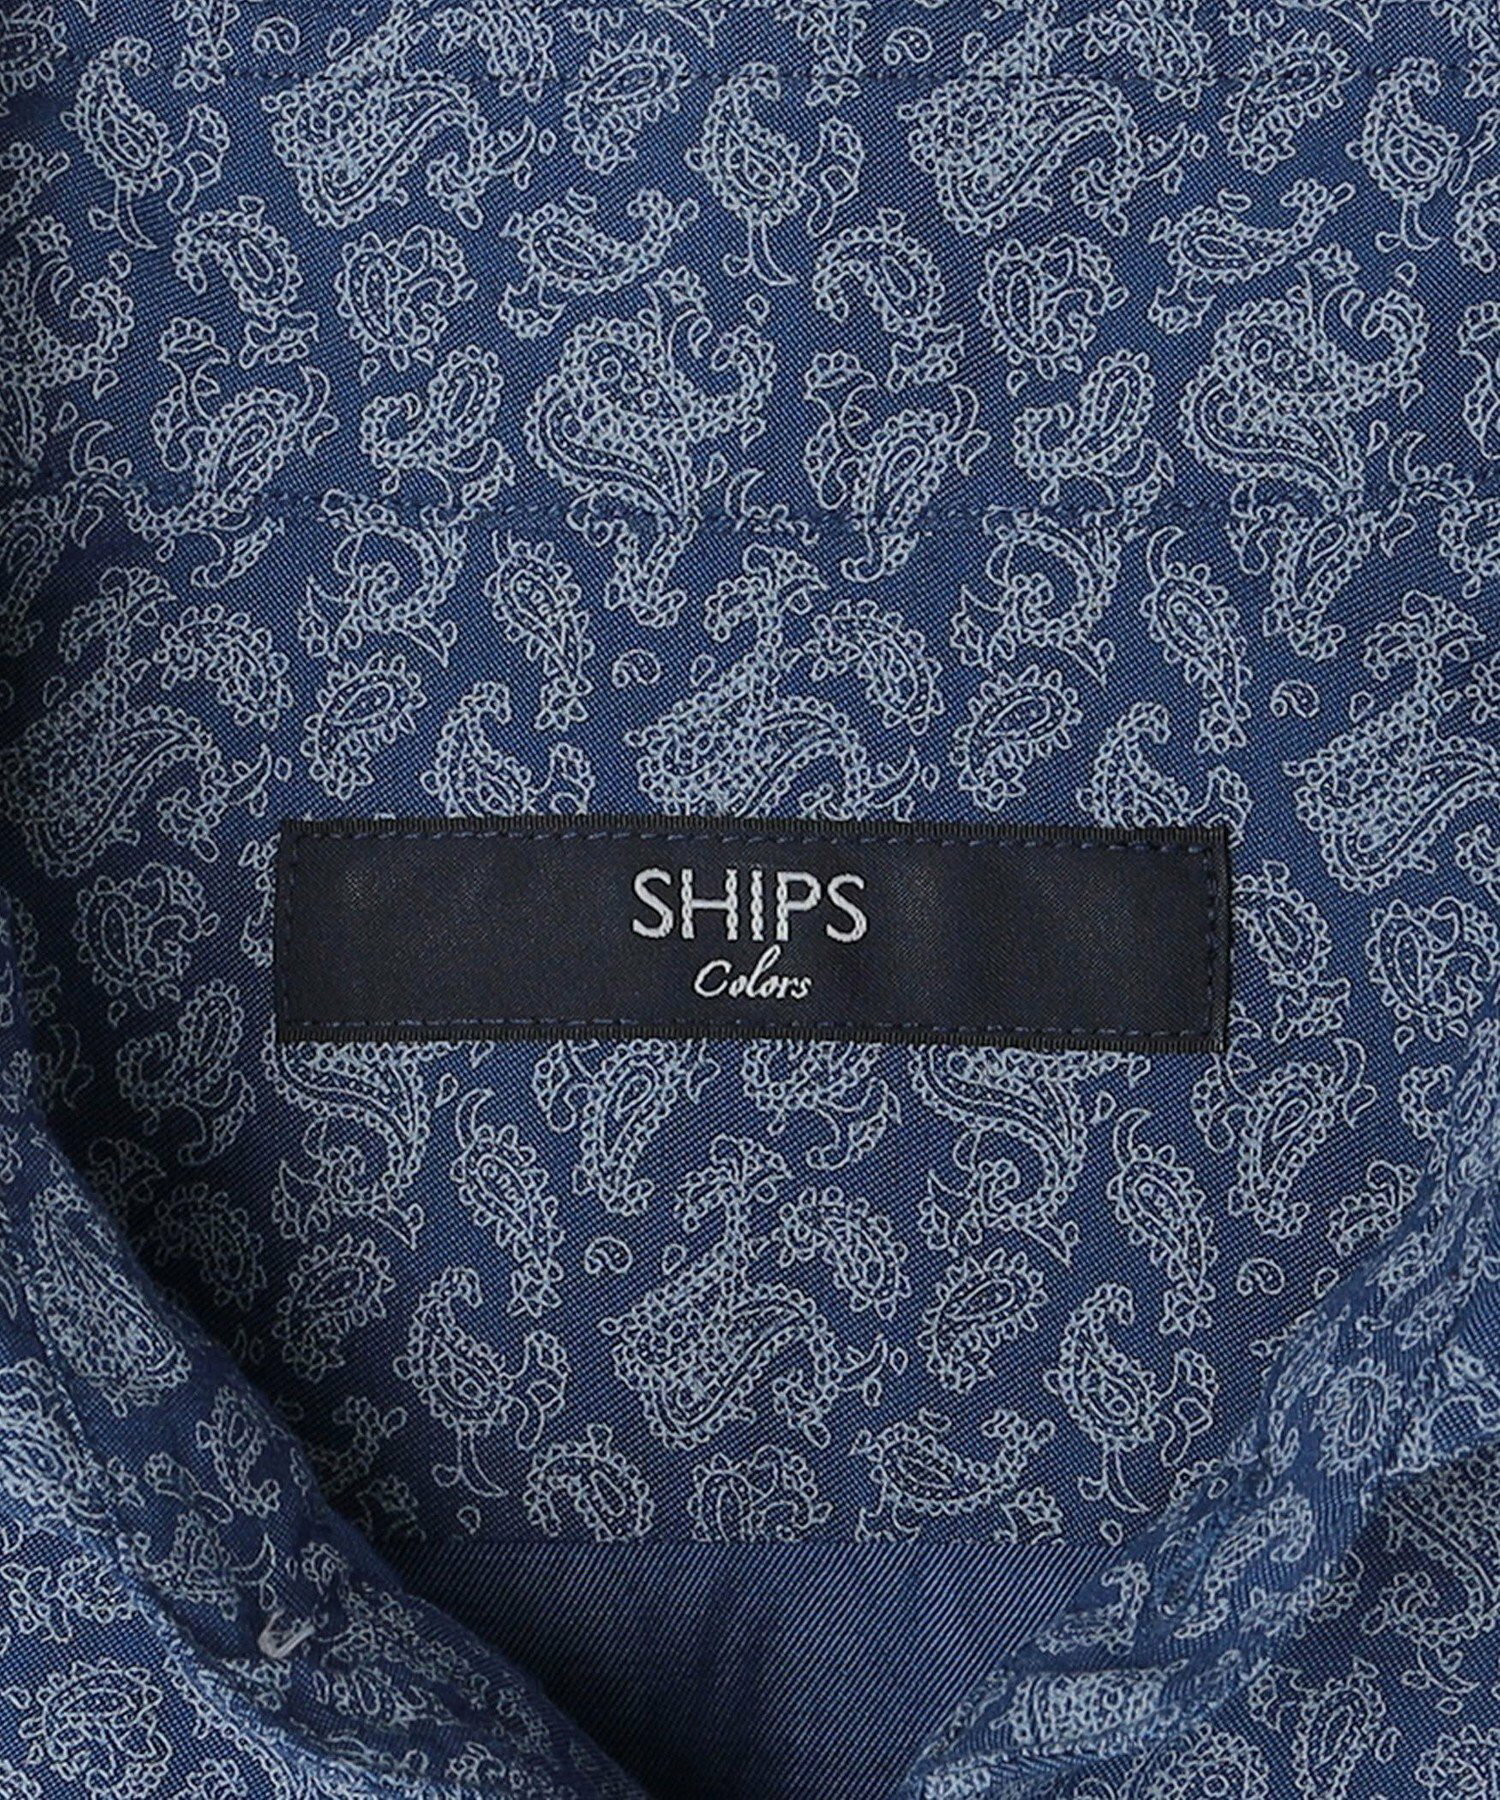 SHIPS Colors: ペイズリー/小紋柄 プリント ワイドカラー ドレスシャツ